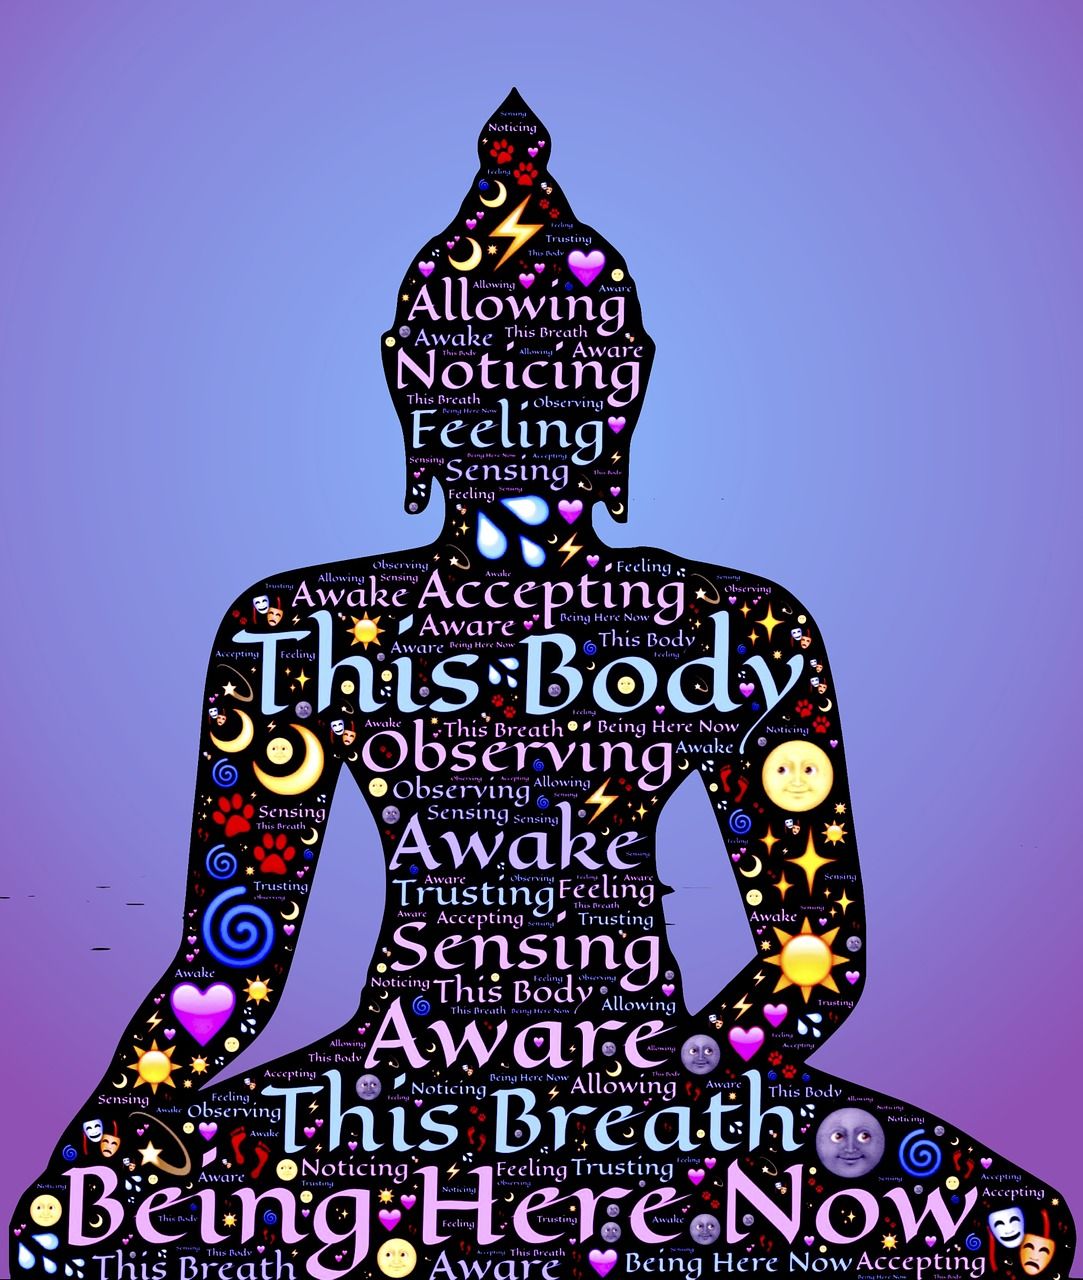 Yoga for Udana Vayu - Conscious Breath Yoga